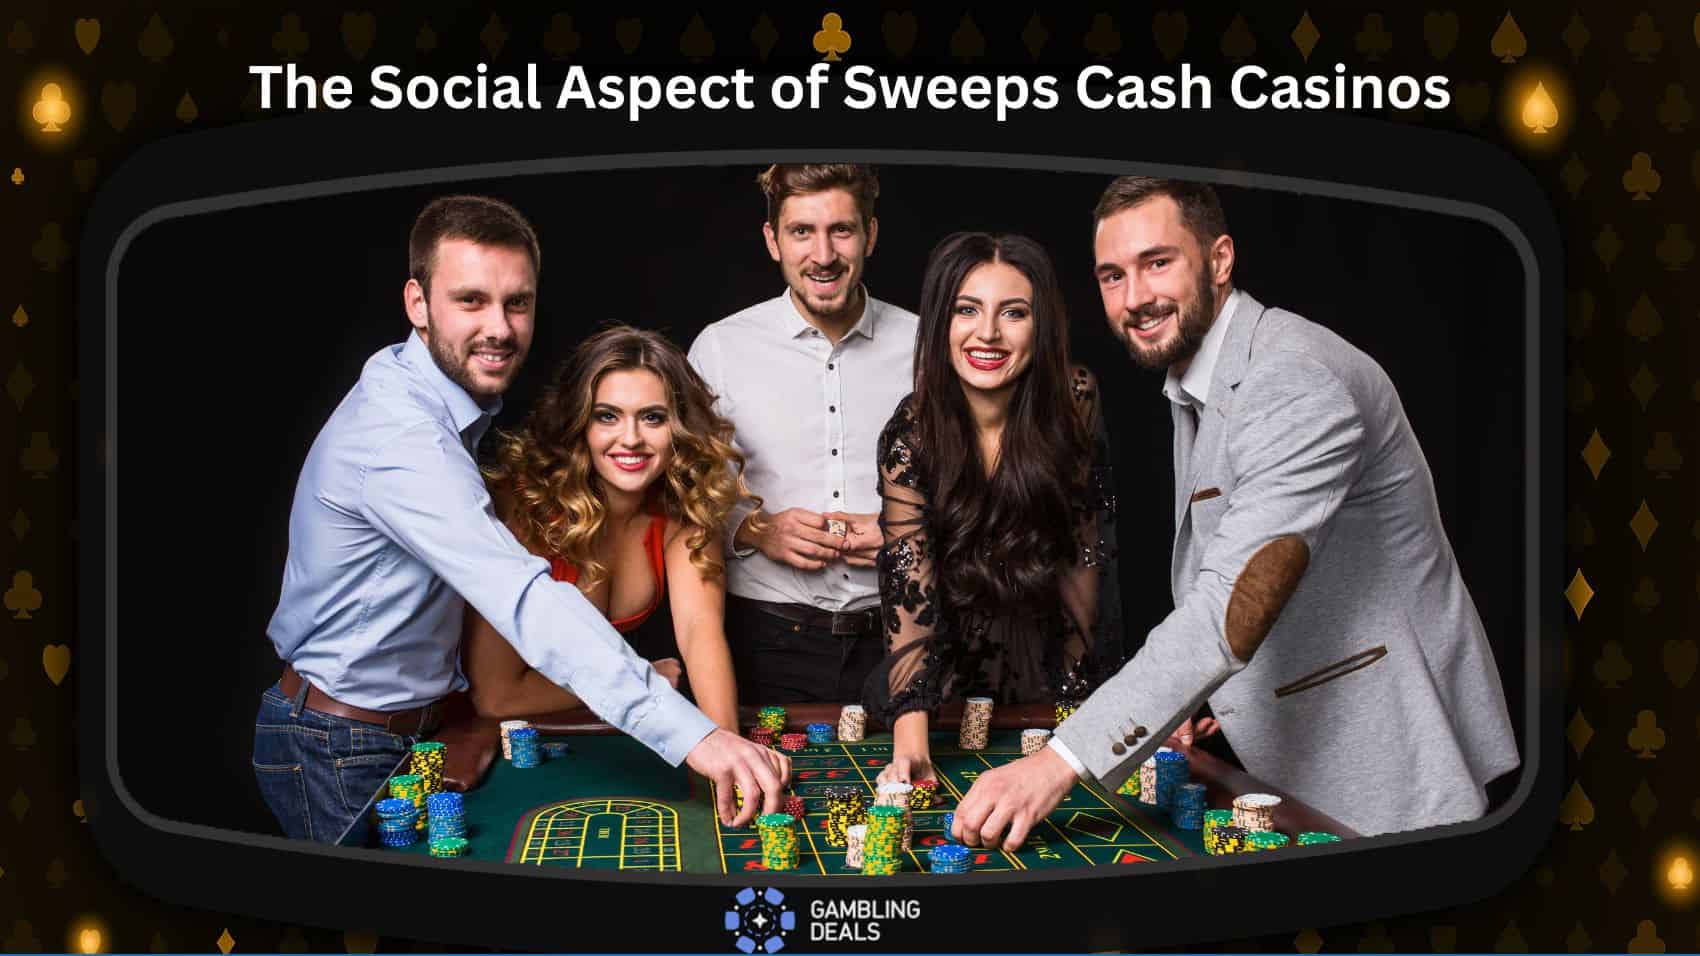 The Social Aspect of Sweeps Cash Casinos